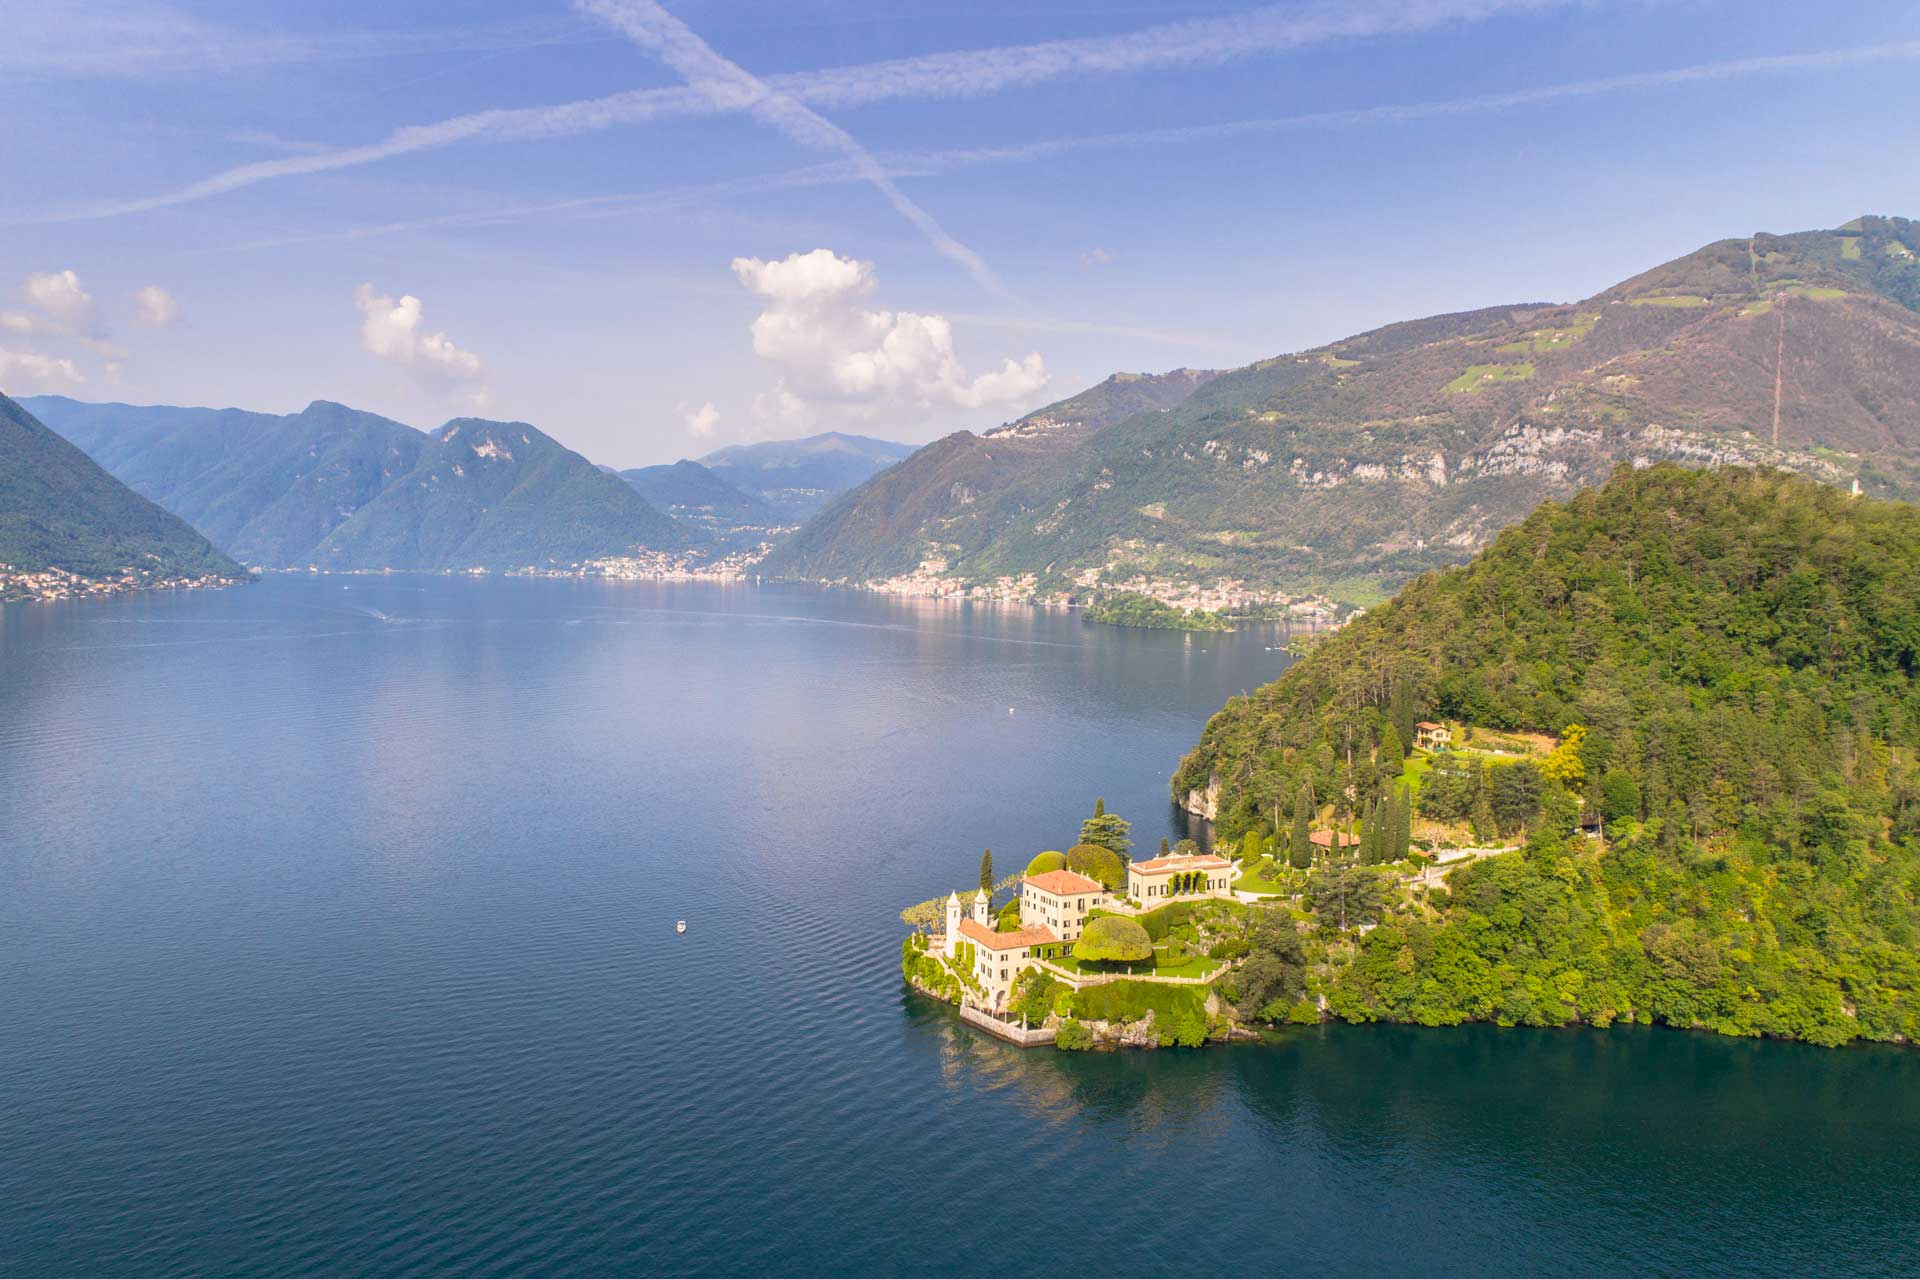 View of Lake Como and mountains